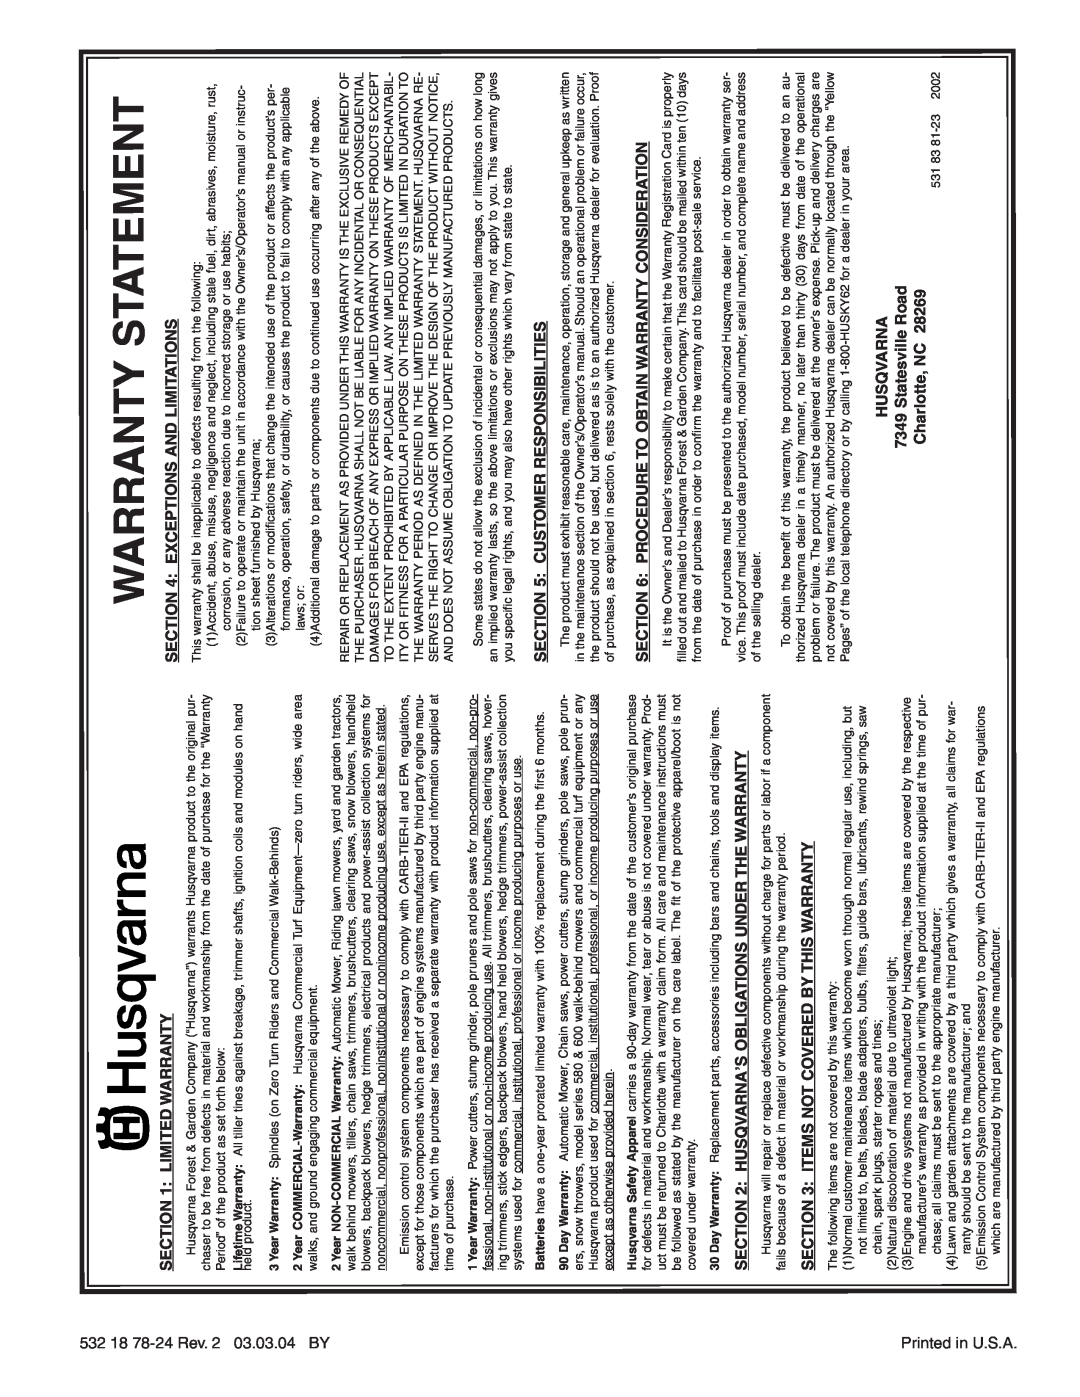 Husqvarna 9027ST Rantywar Tementsta, 532 18 78-24 Rev. 2 03.03.04 BY, Printed in U.S.A, 2002 23-81, Anr Aqv Suh 